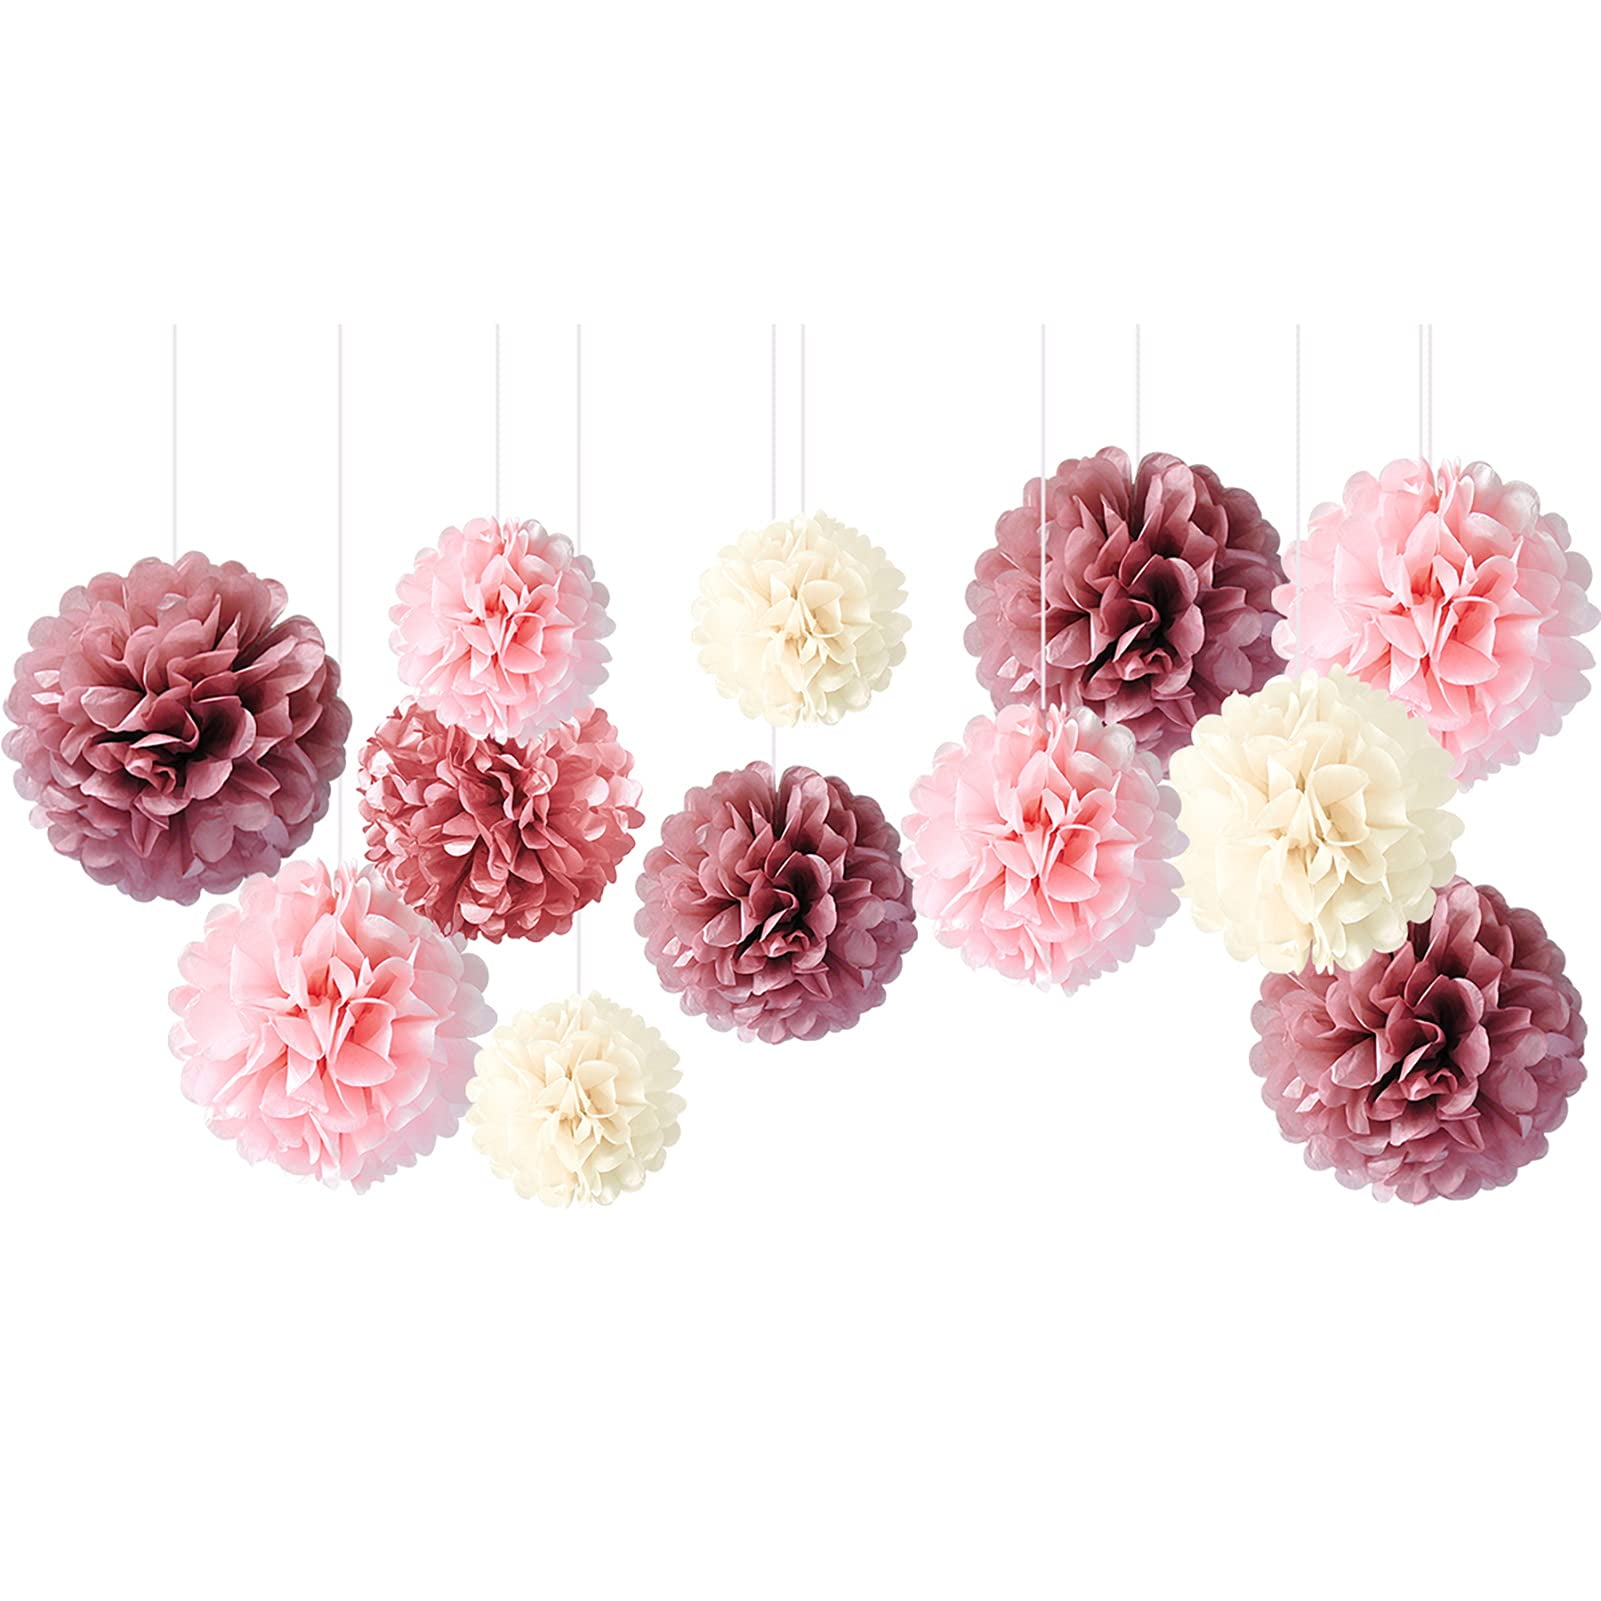 CHERRY BLOSSOM Tissue Paper Pom Poms.. Nursery Decor / Party Decoration /  Weddings 